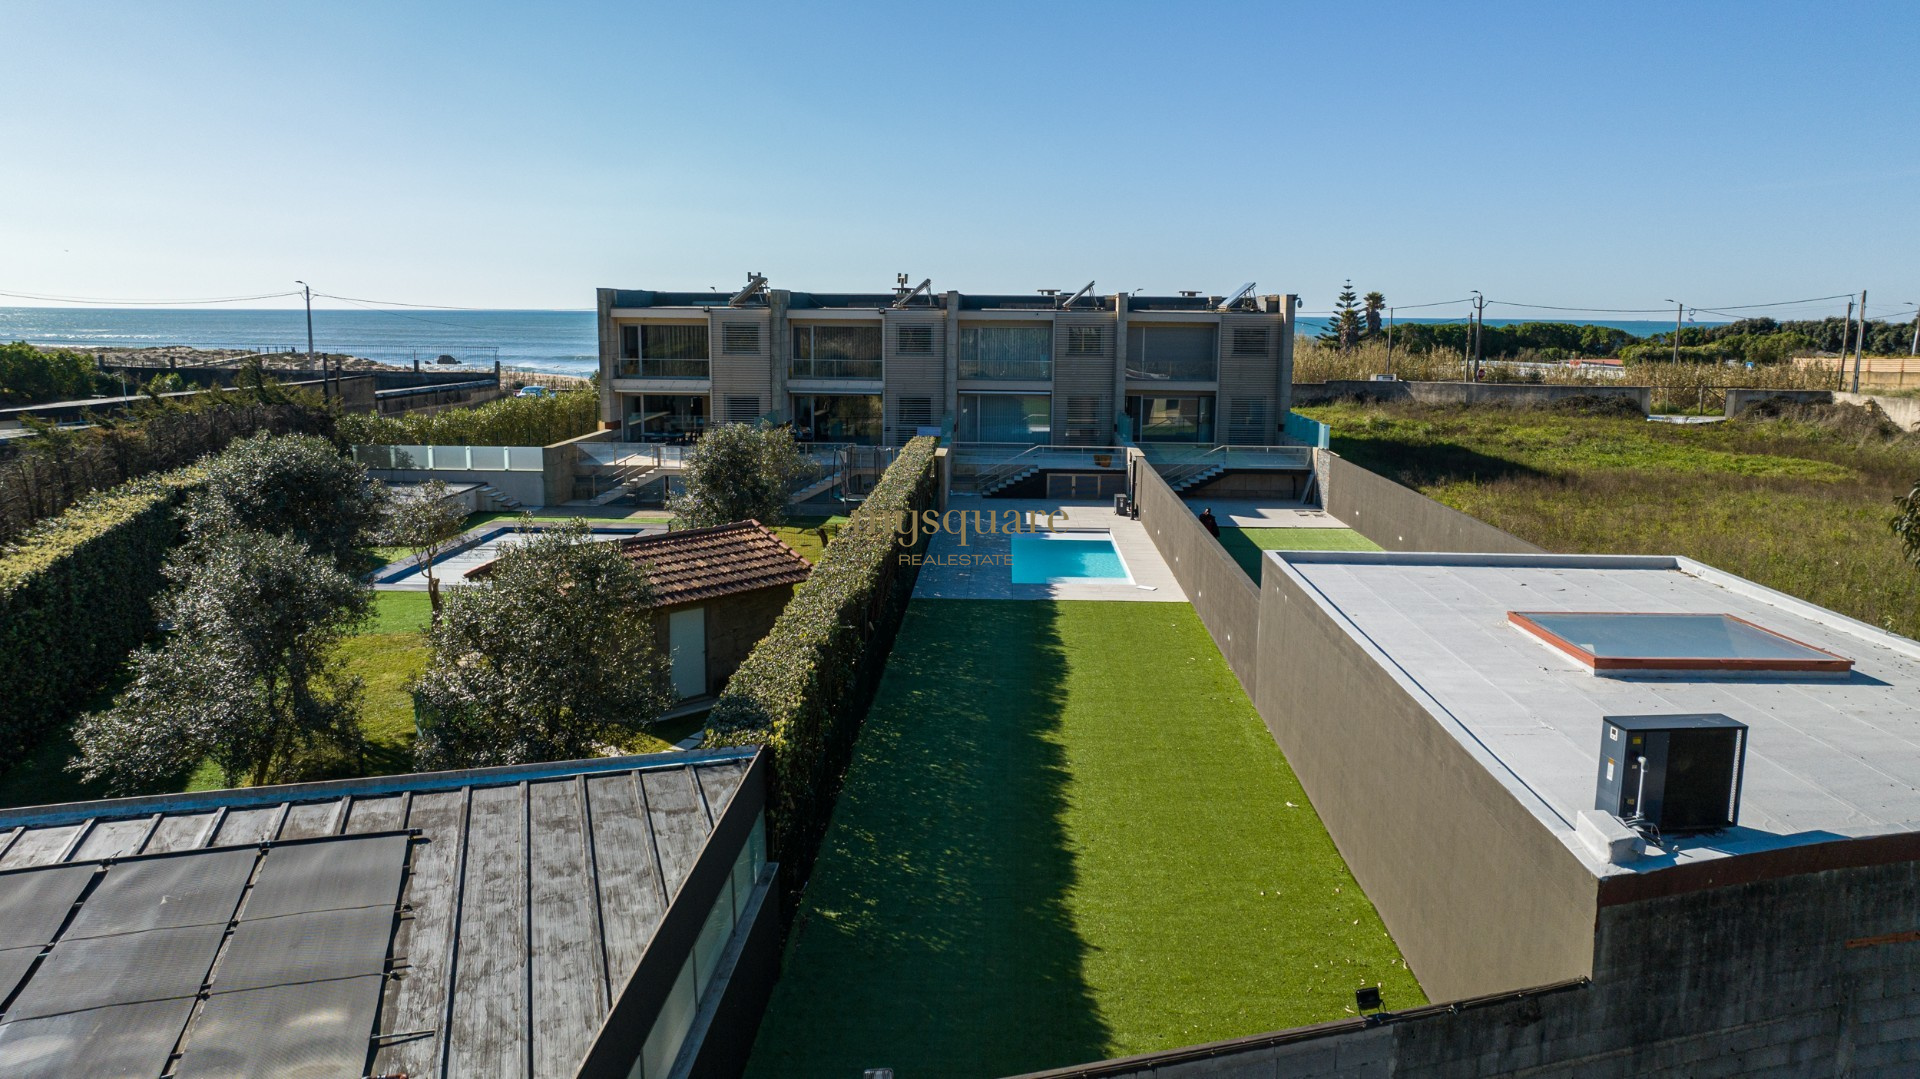 Maison T3 1 avec piscine en bord de mer - Madalena, Gaia